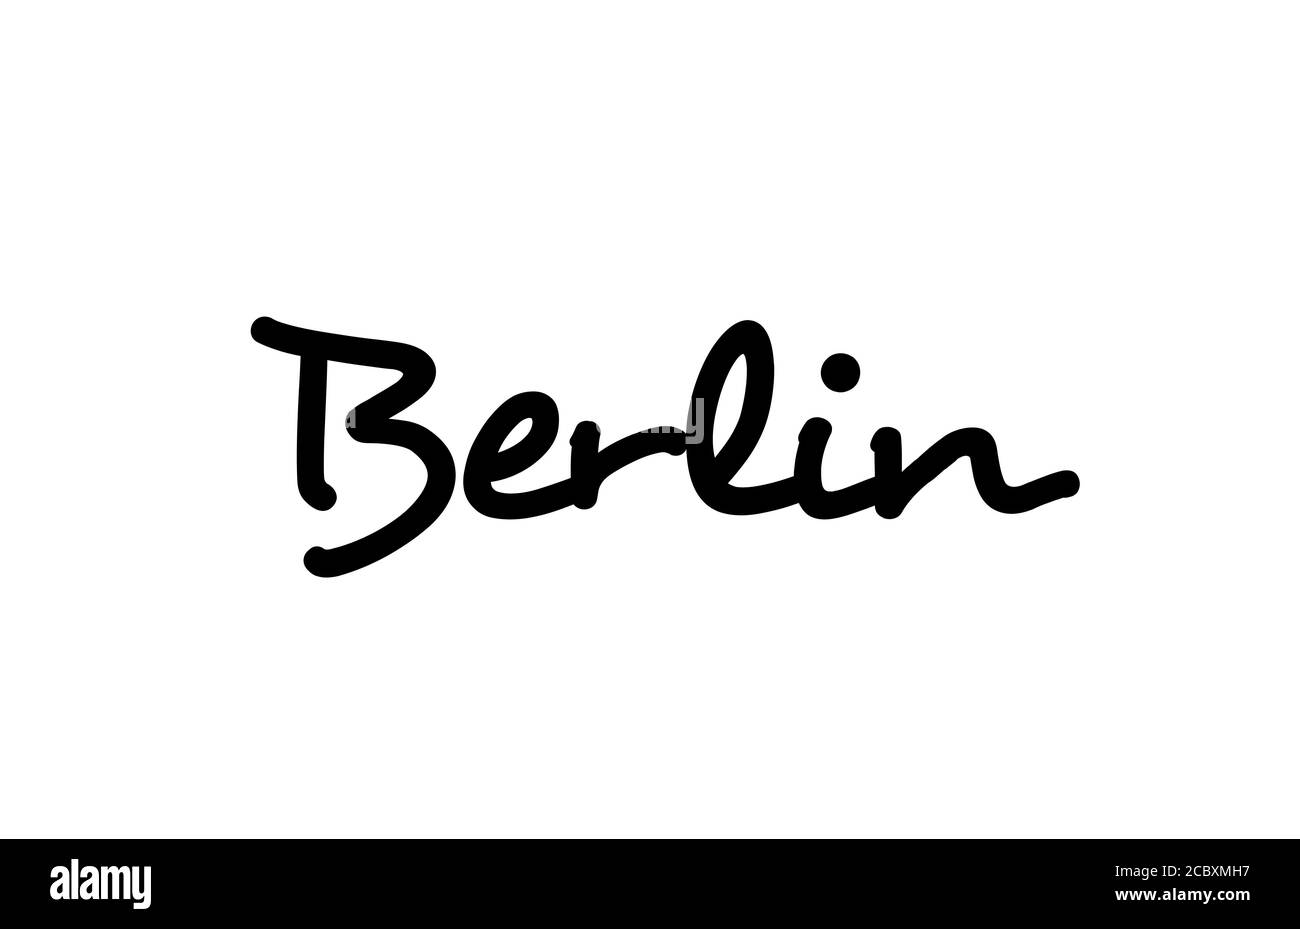 das Logo der Marke Afri Cola, Berlin Stock Photo - Alamy